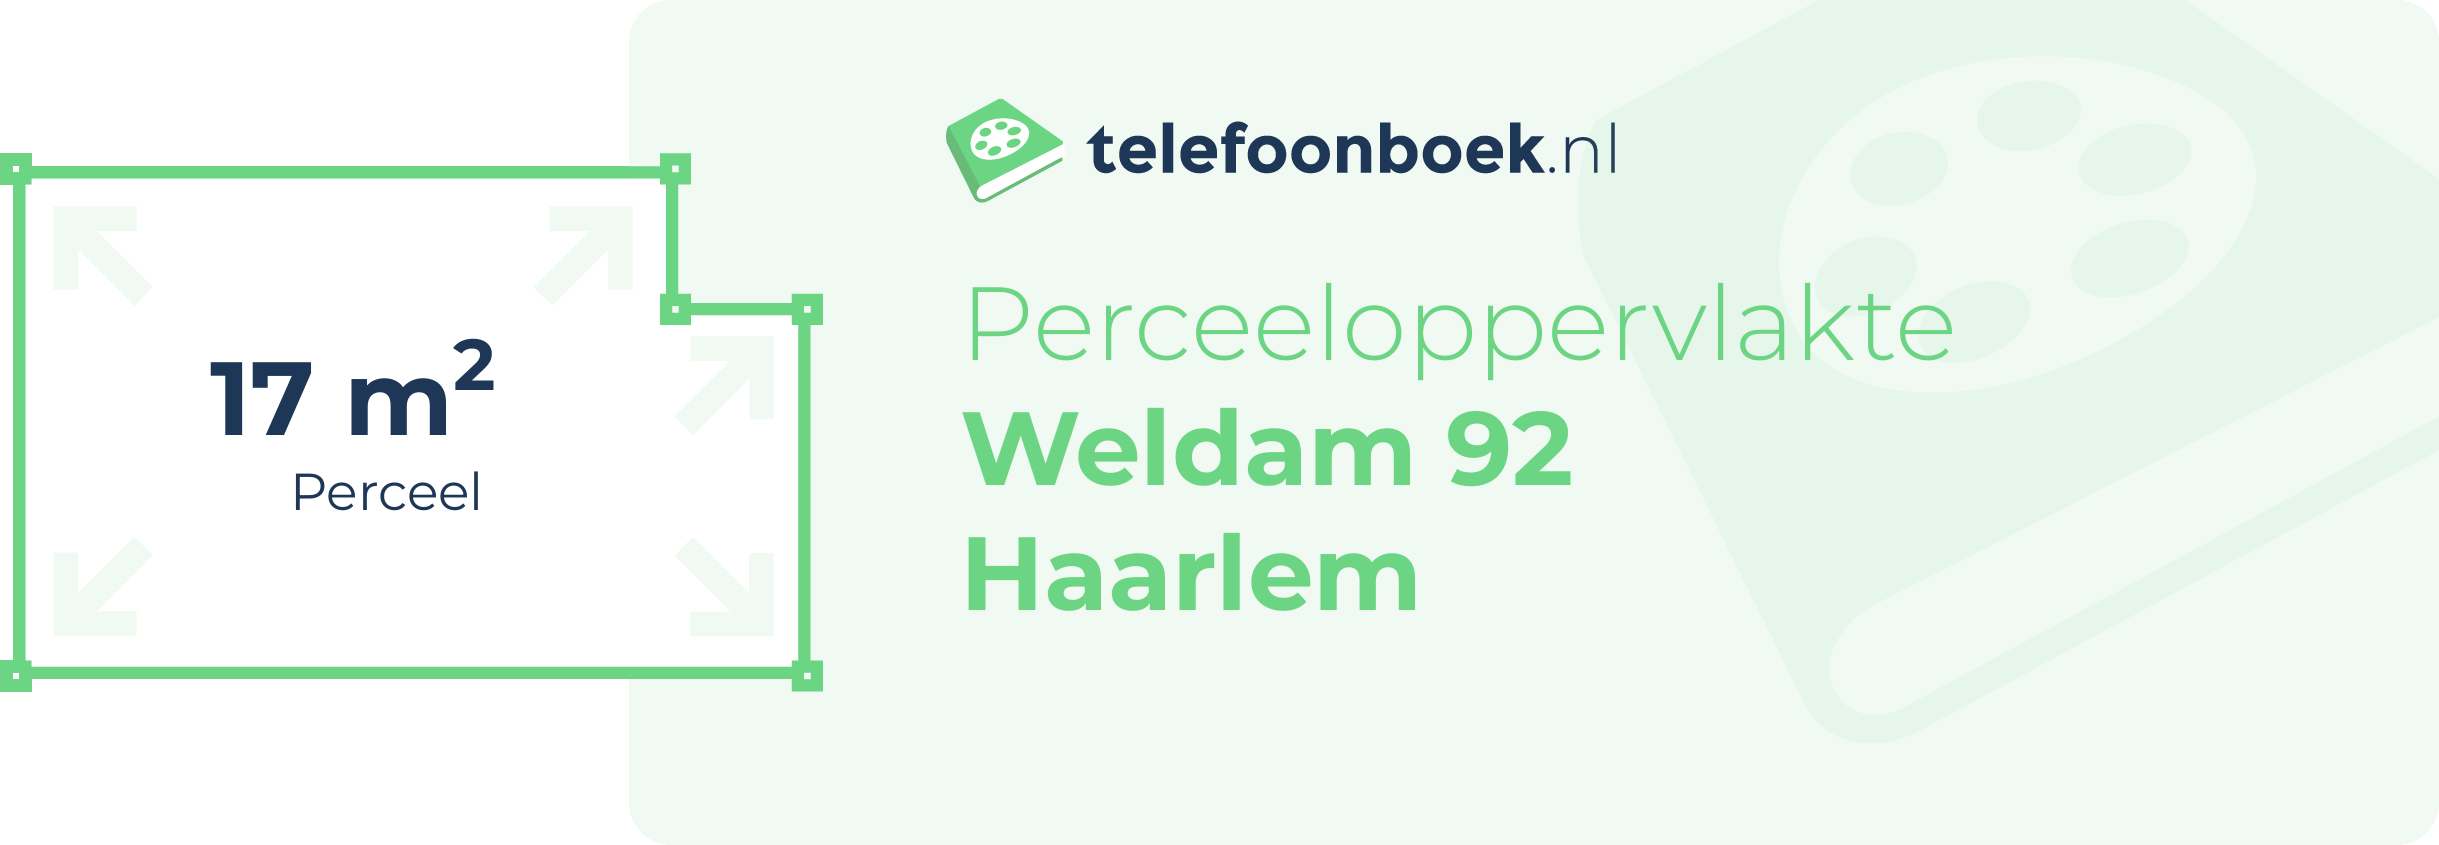 Perceeloppervlakte Weldam 92 Haarlem